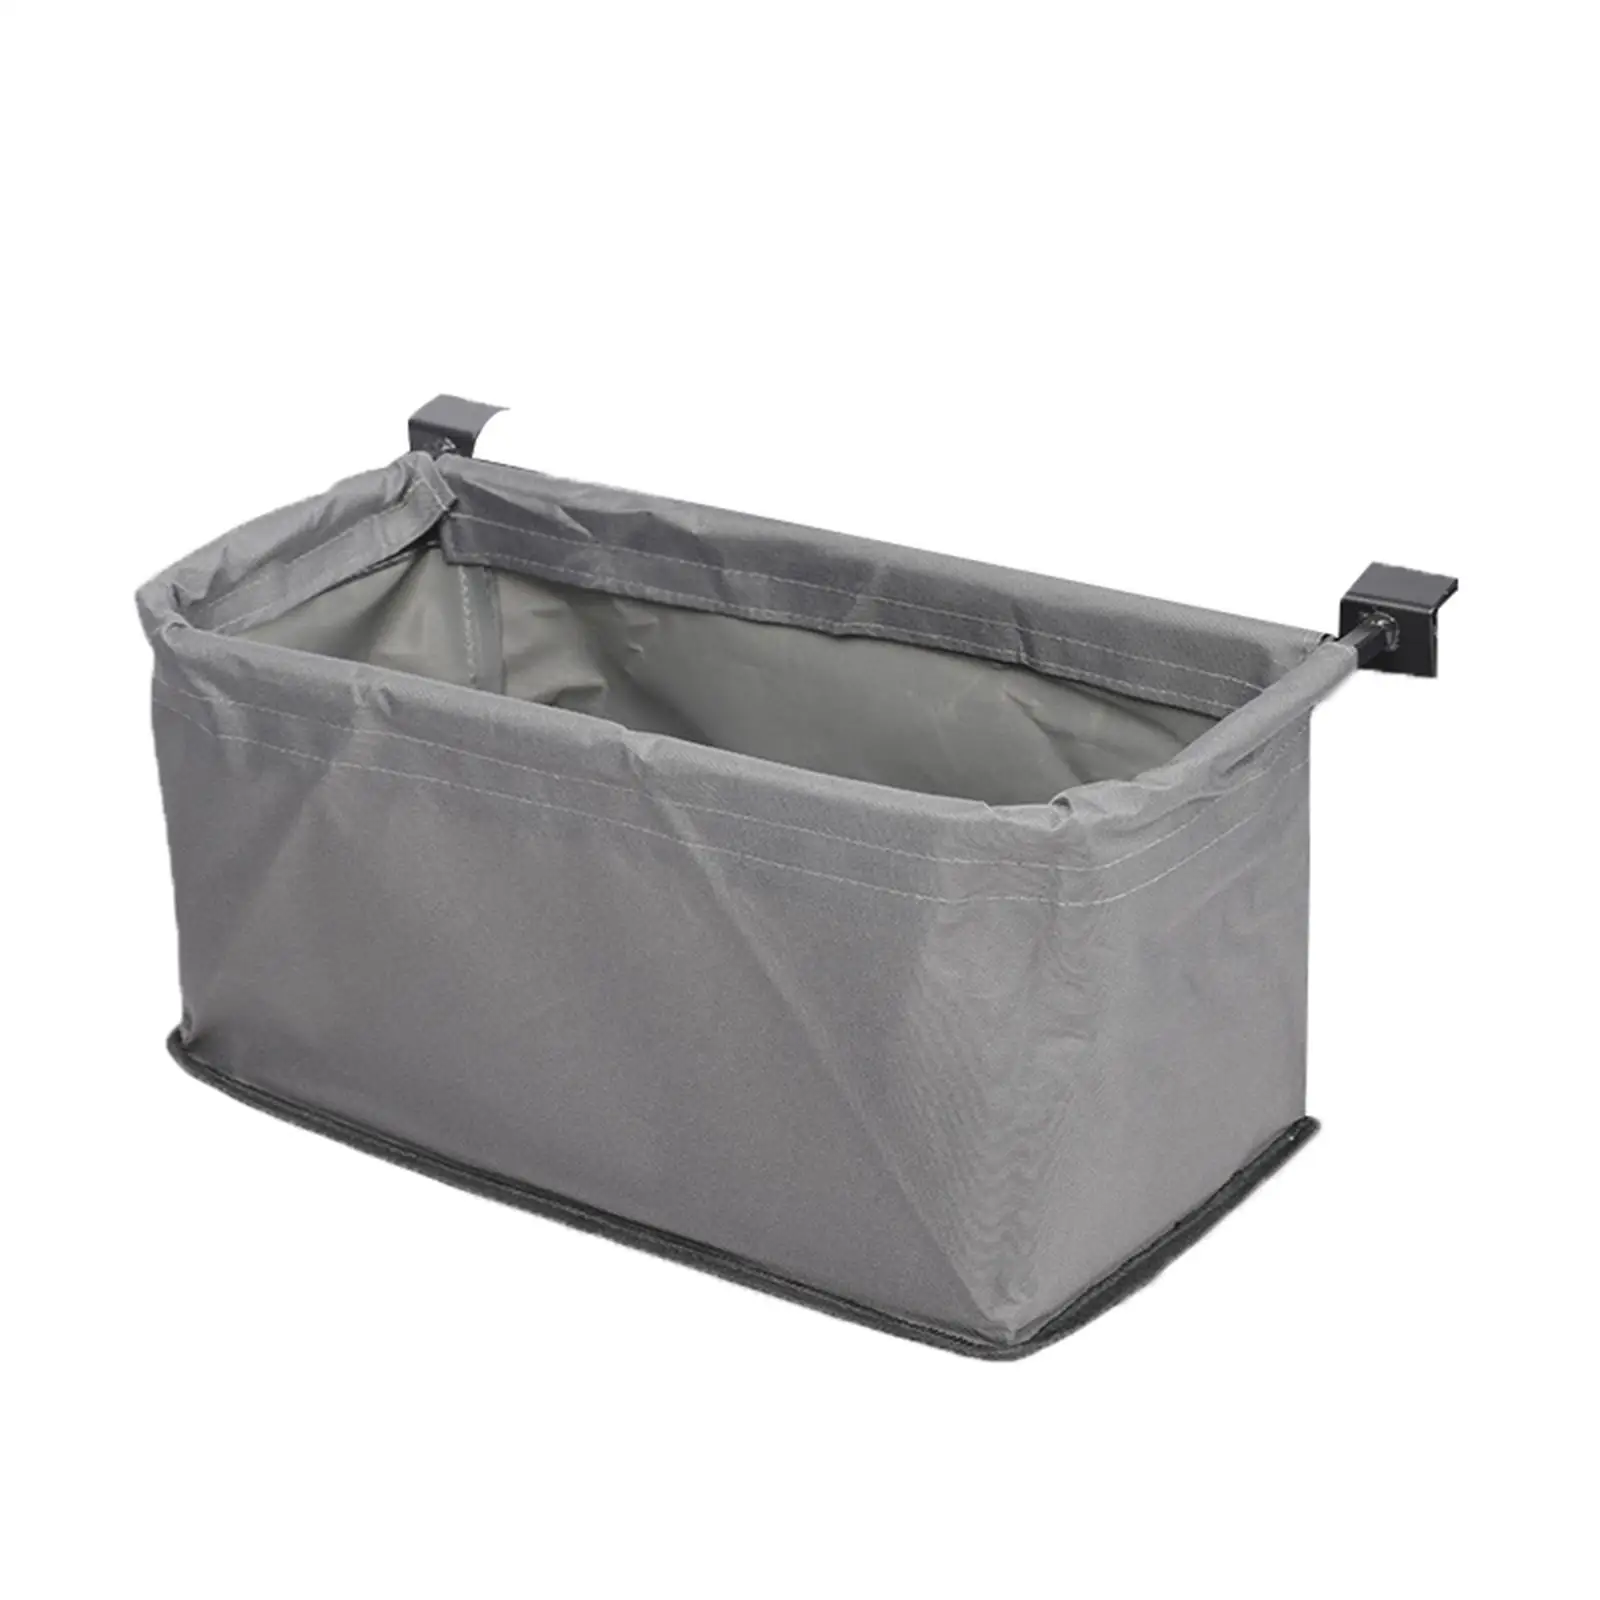 Tail Bag for Push-Pull Wagon, Car Basket Tail Bag for Wagon Cart, Shopping